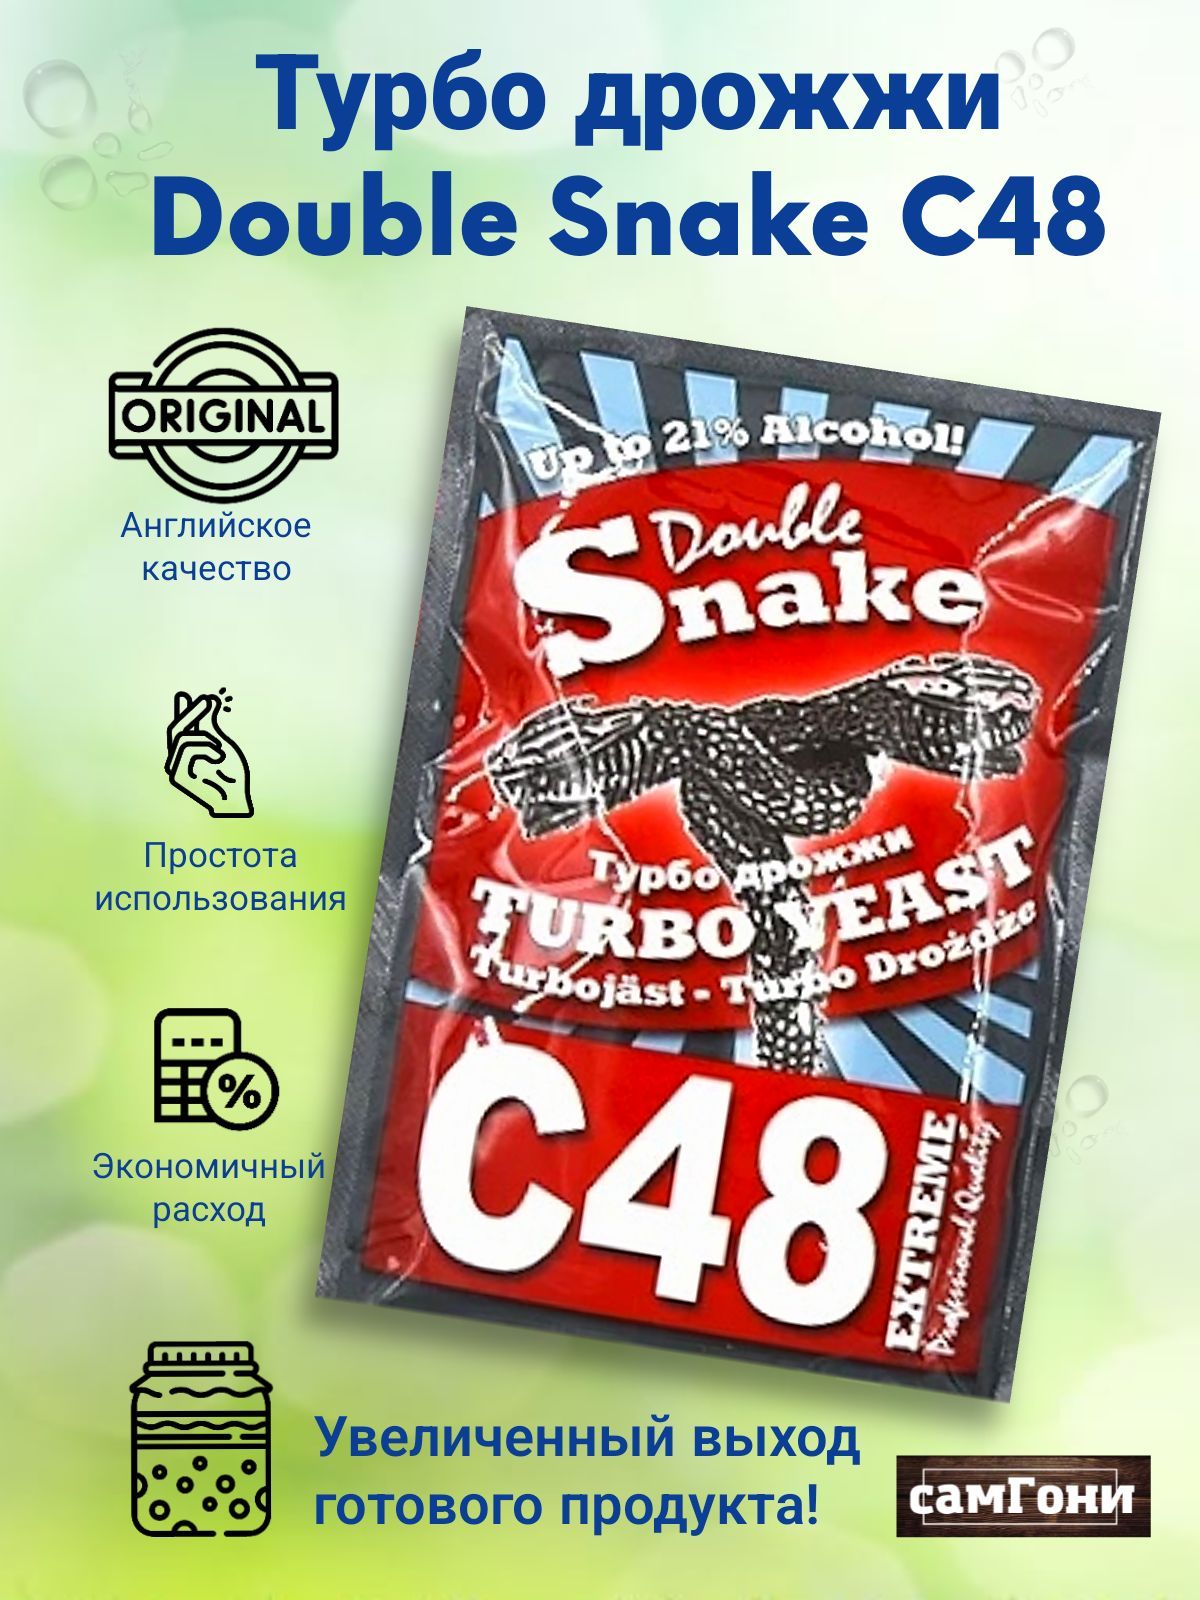 Дрожжи снейк. Дрожжи спиртовые Double Snake c48. Турбо дрожжи Double Snake c48. Турбо дрожжи Double Snake Turbo yeast c 48 Turbo. Дрожжи c48.